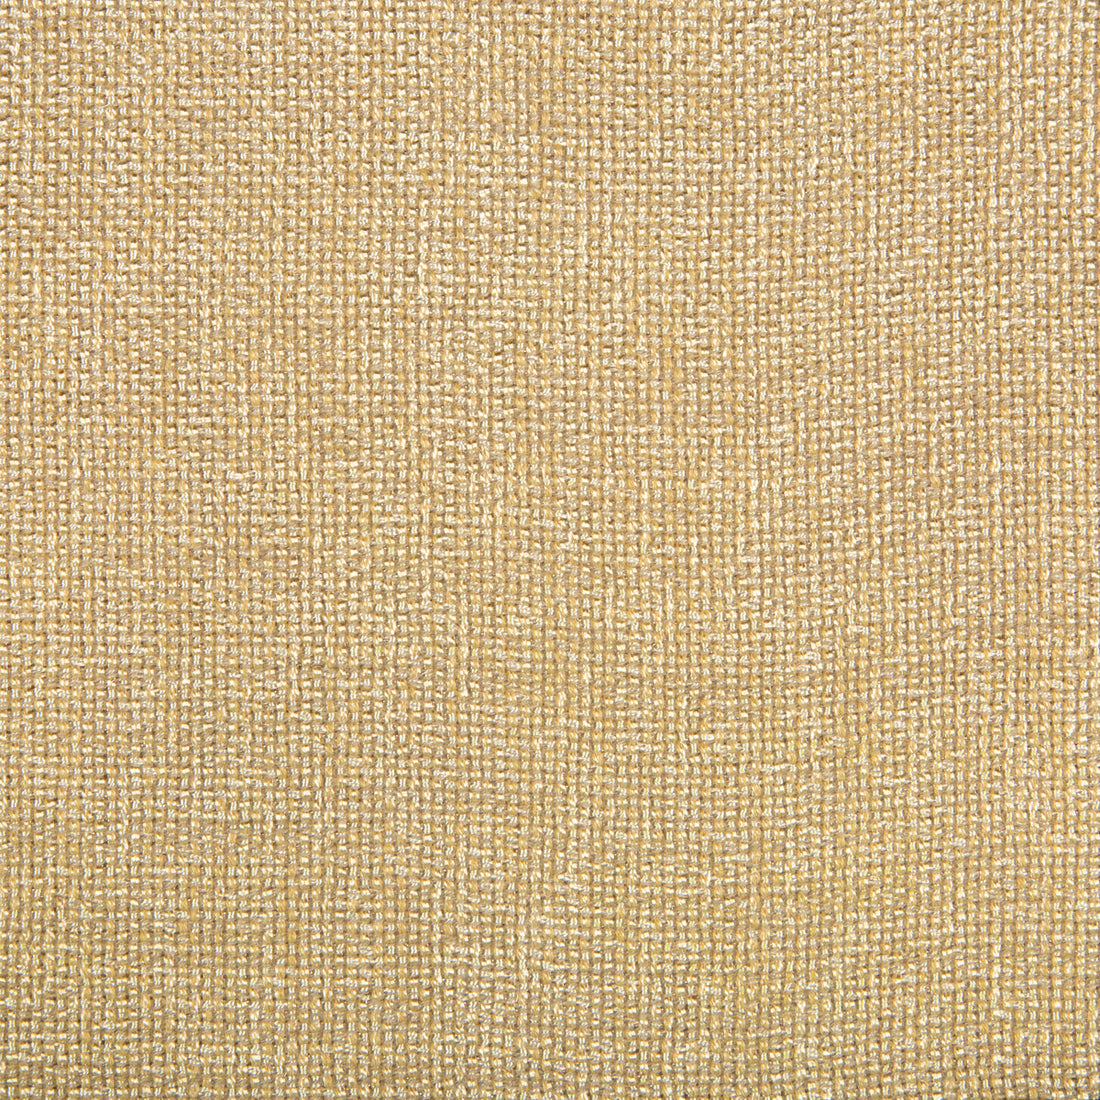 Kravet Smart fabric in 34939-16 color - pattern 34939.16.0 - by Kravet Smart